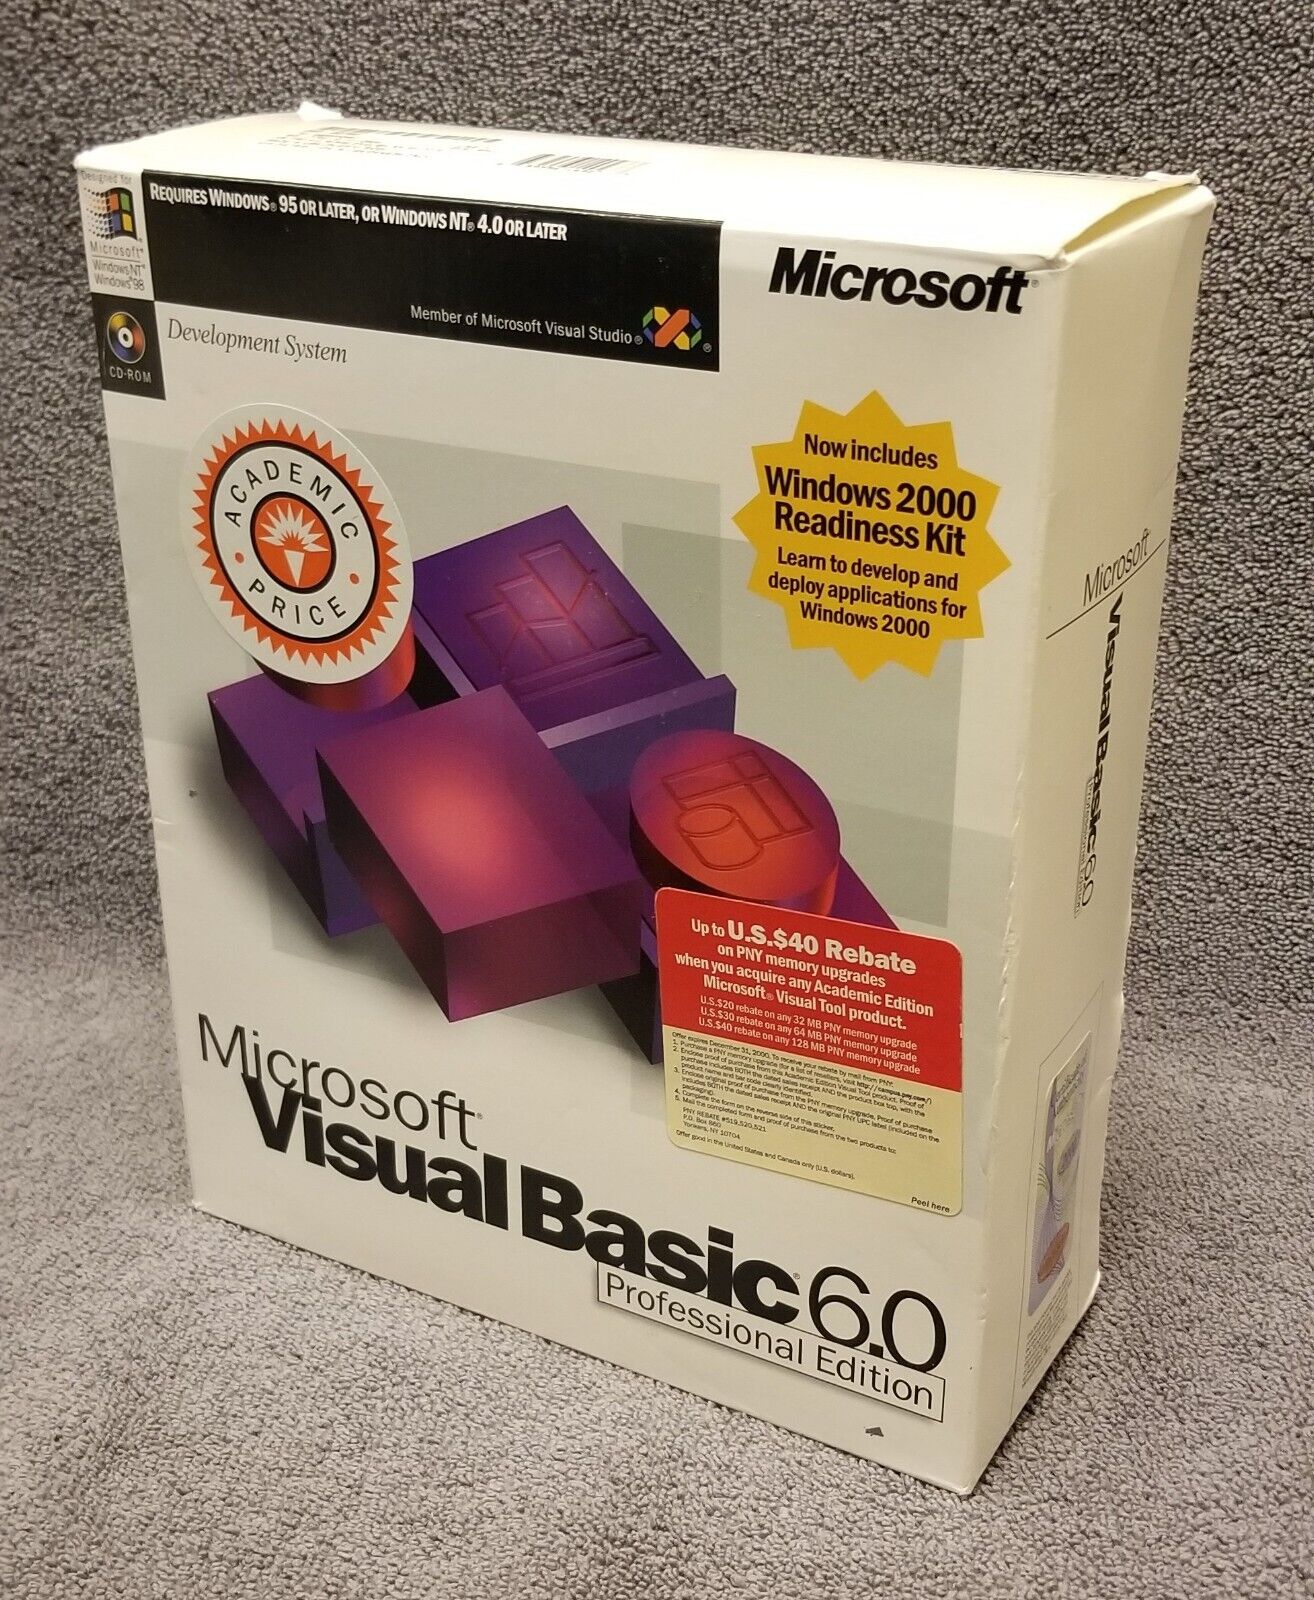 Microsoft Visual Basic 6.0 Professional Edition In Original Retail Box